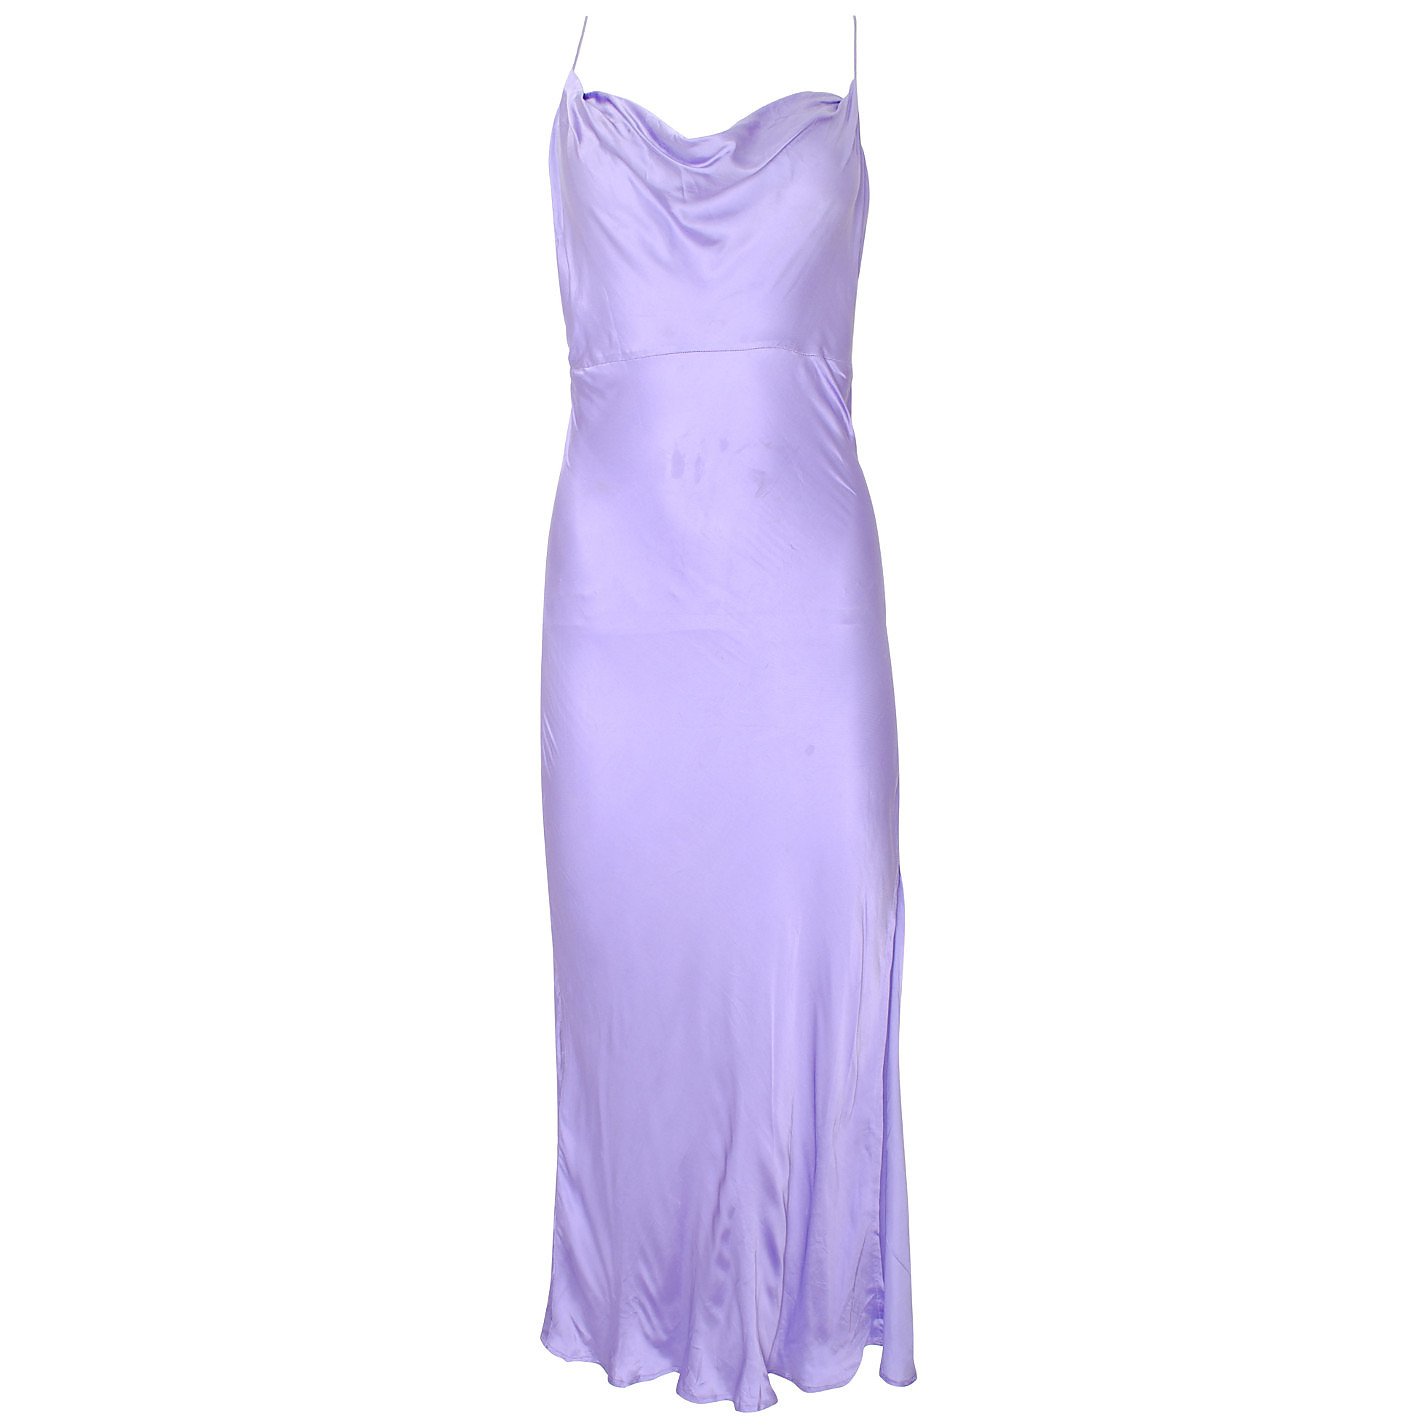 Turquoise Lane Maxi Slip Dress